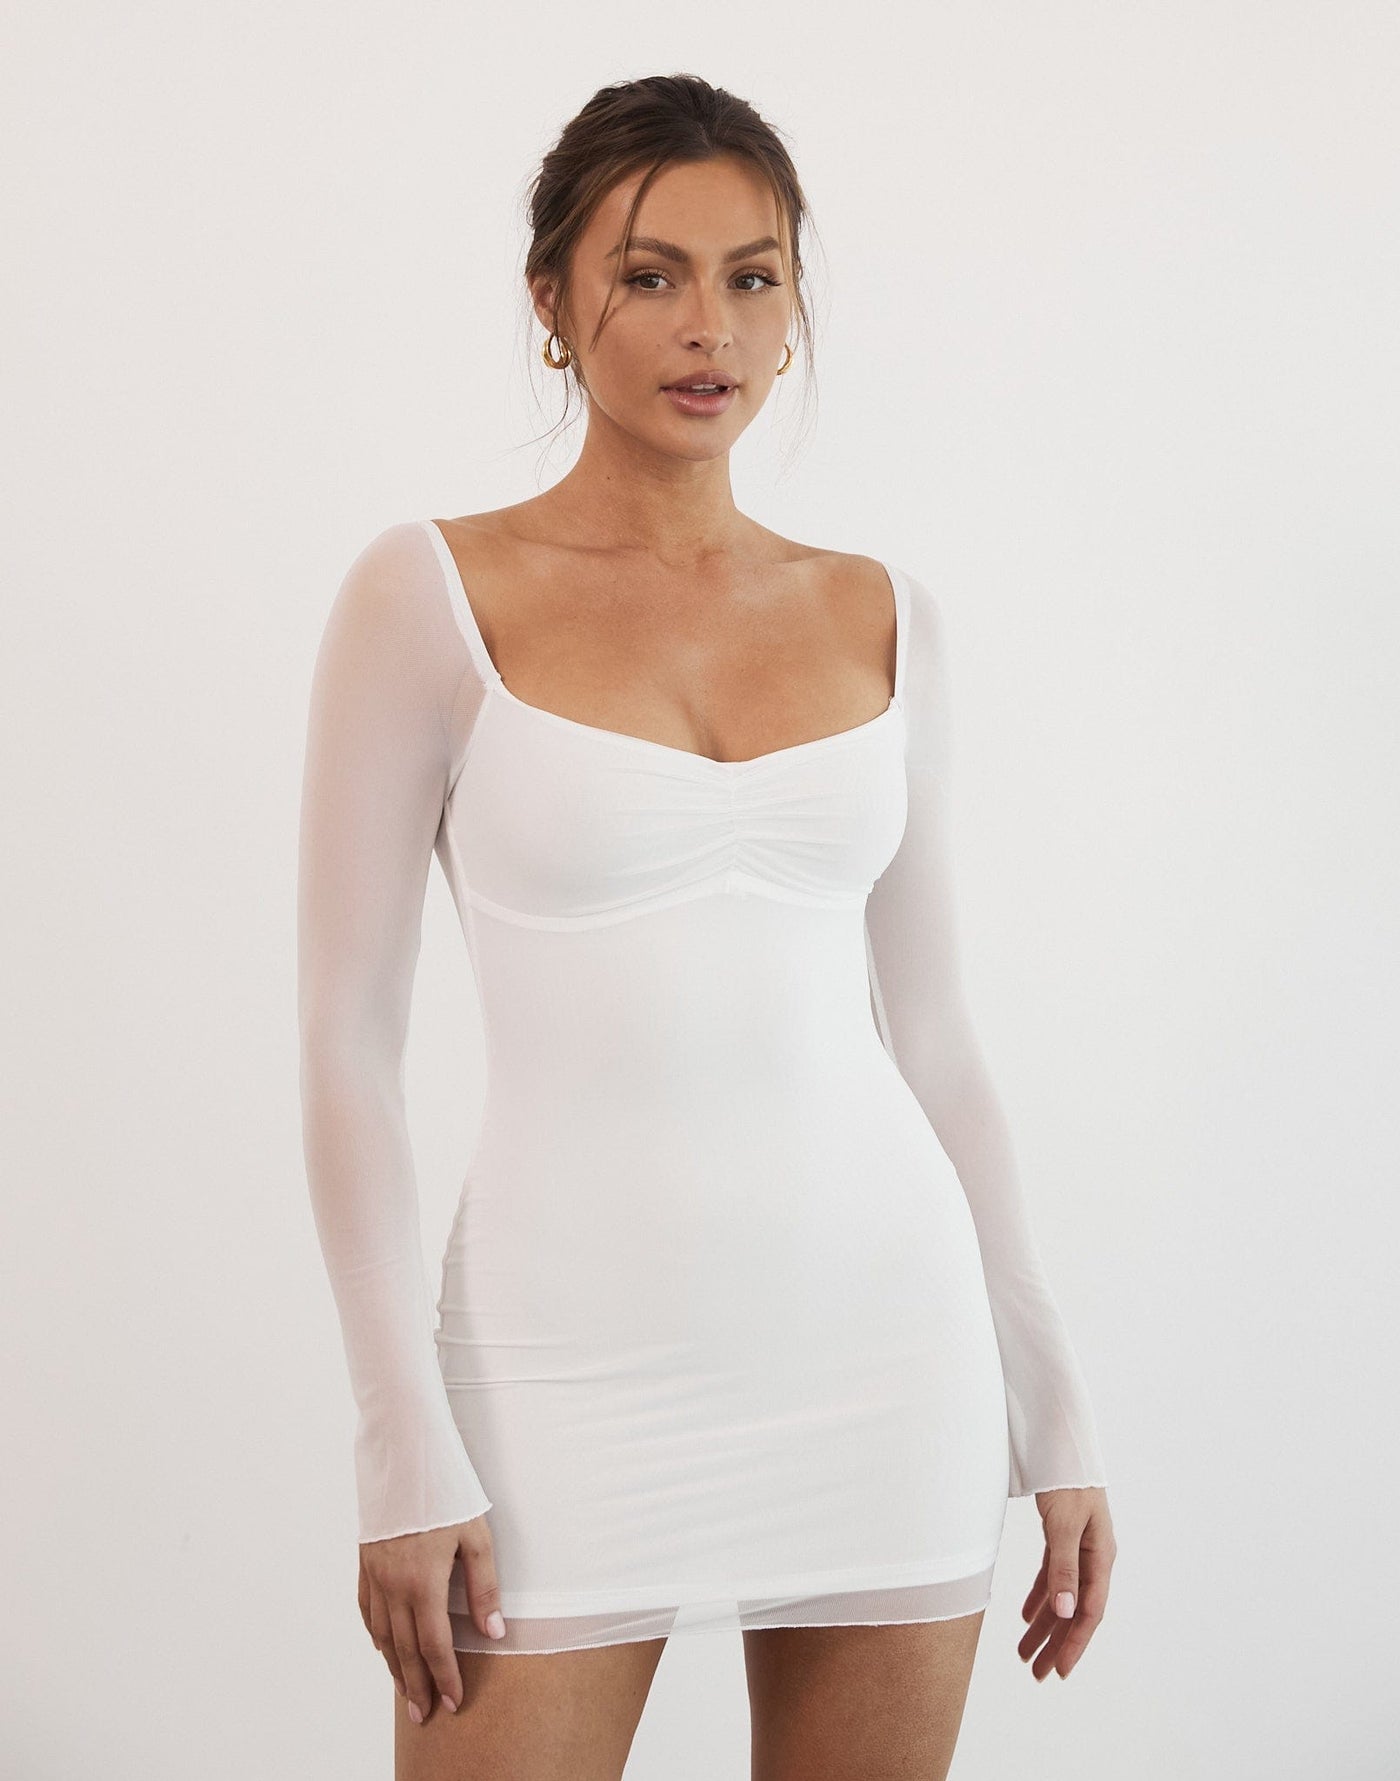 Linden Long Sleeve Mini Dress (White) - Sheer Sleeved Mini Dress - Women's Dress - Charcoal Clothing